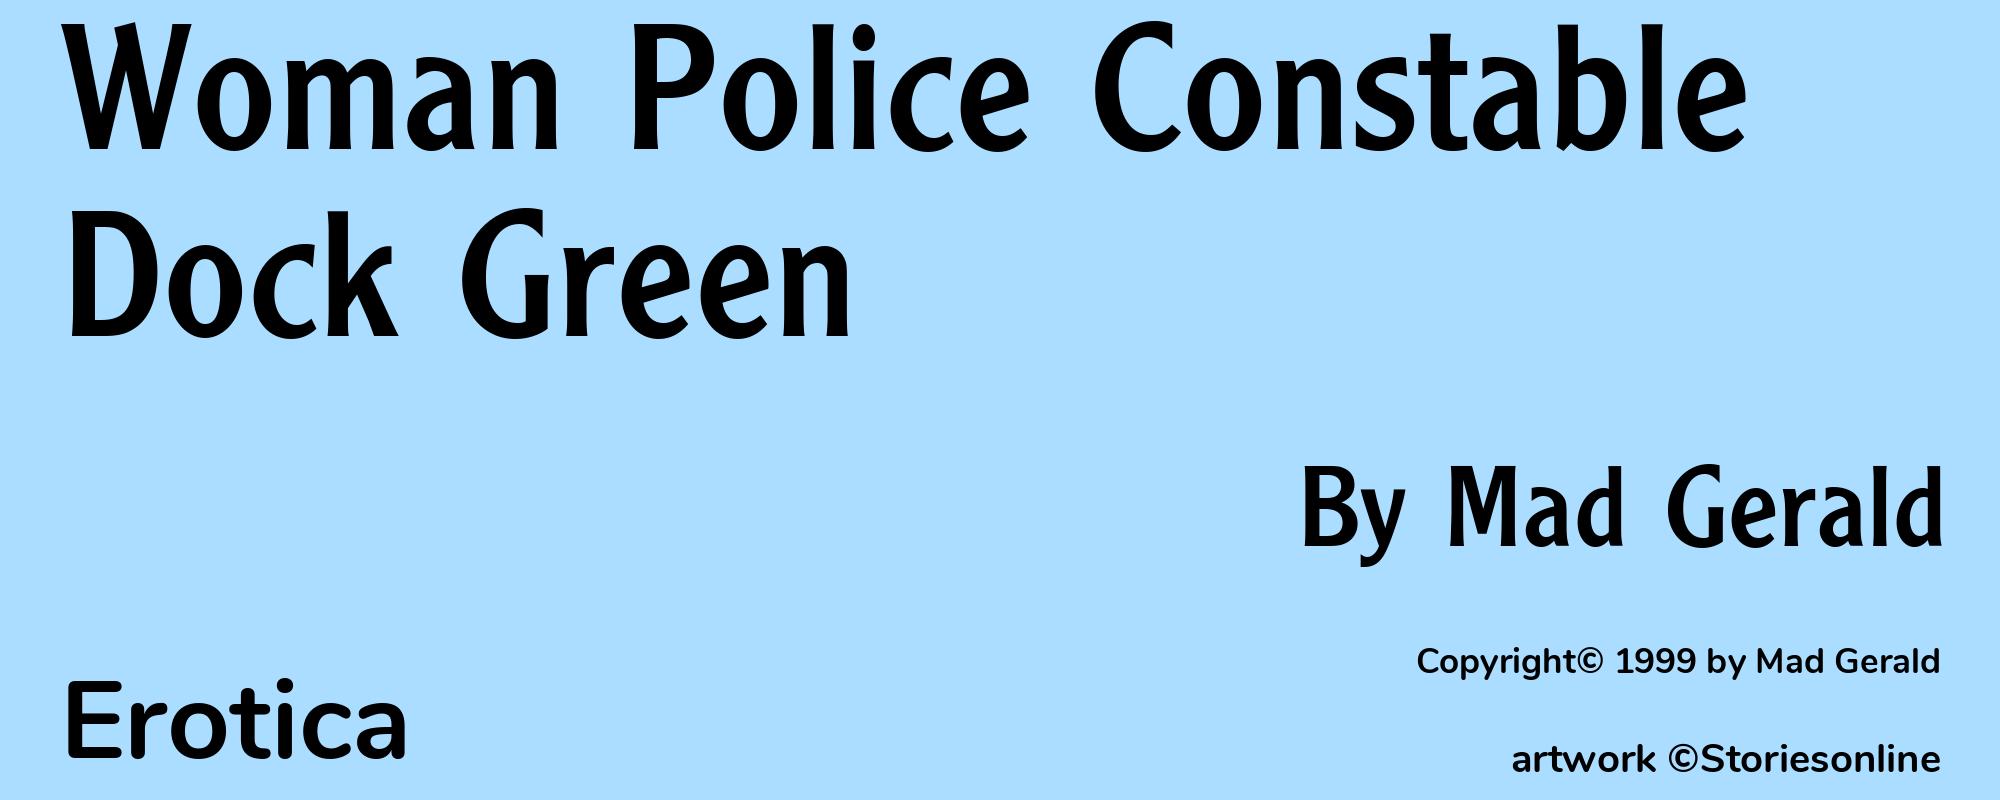 Woman Police Constable Dock Green - Cover